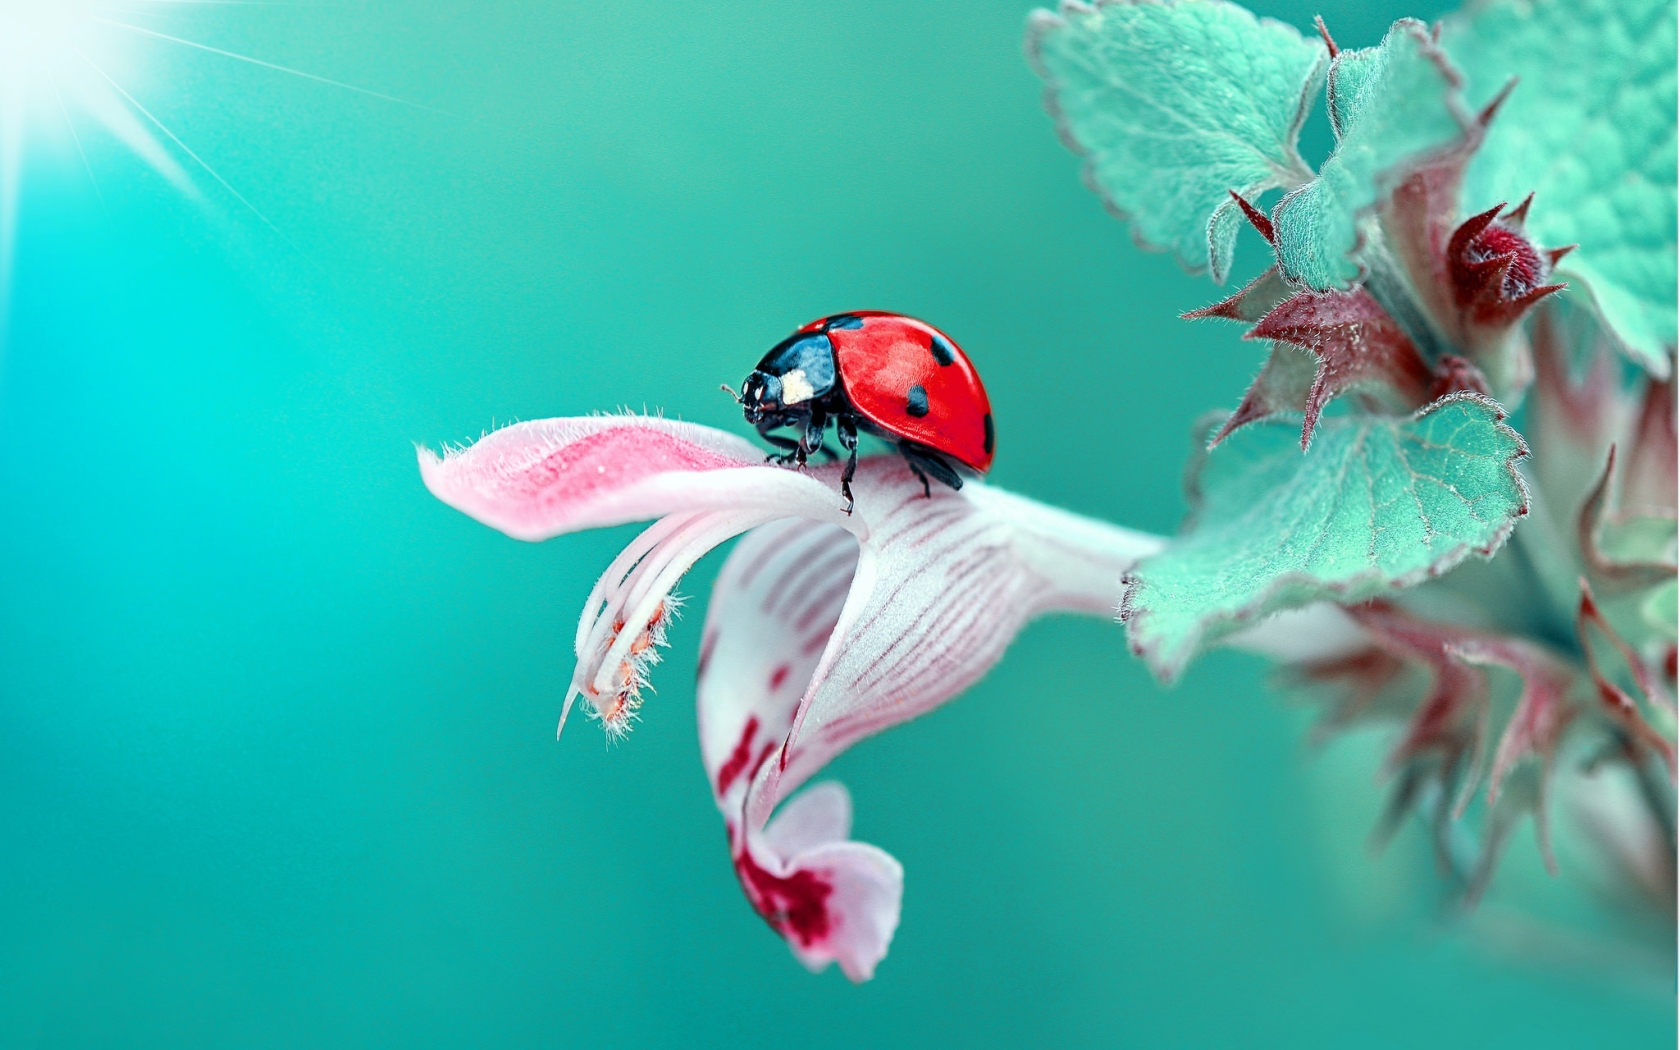 Insect Ladybug Macro, Full HD 2K Wallpaper